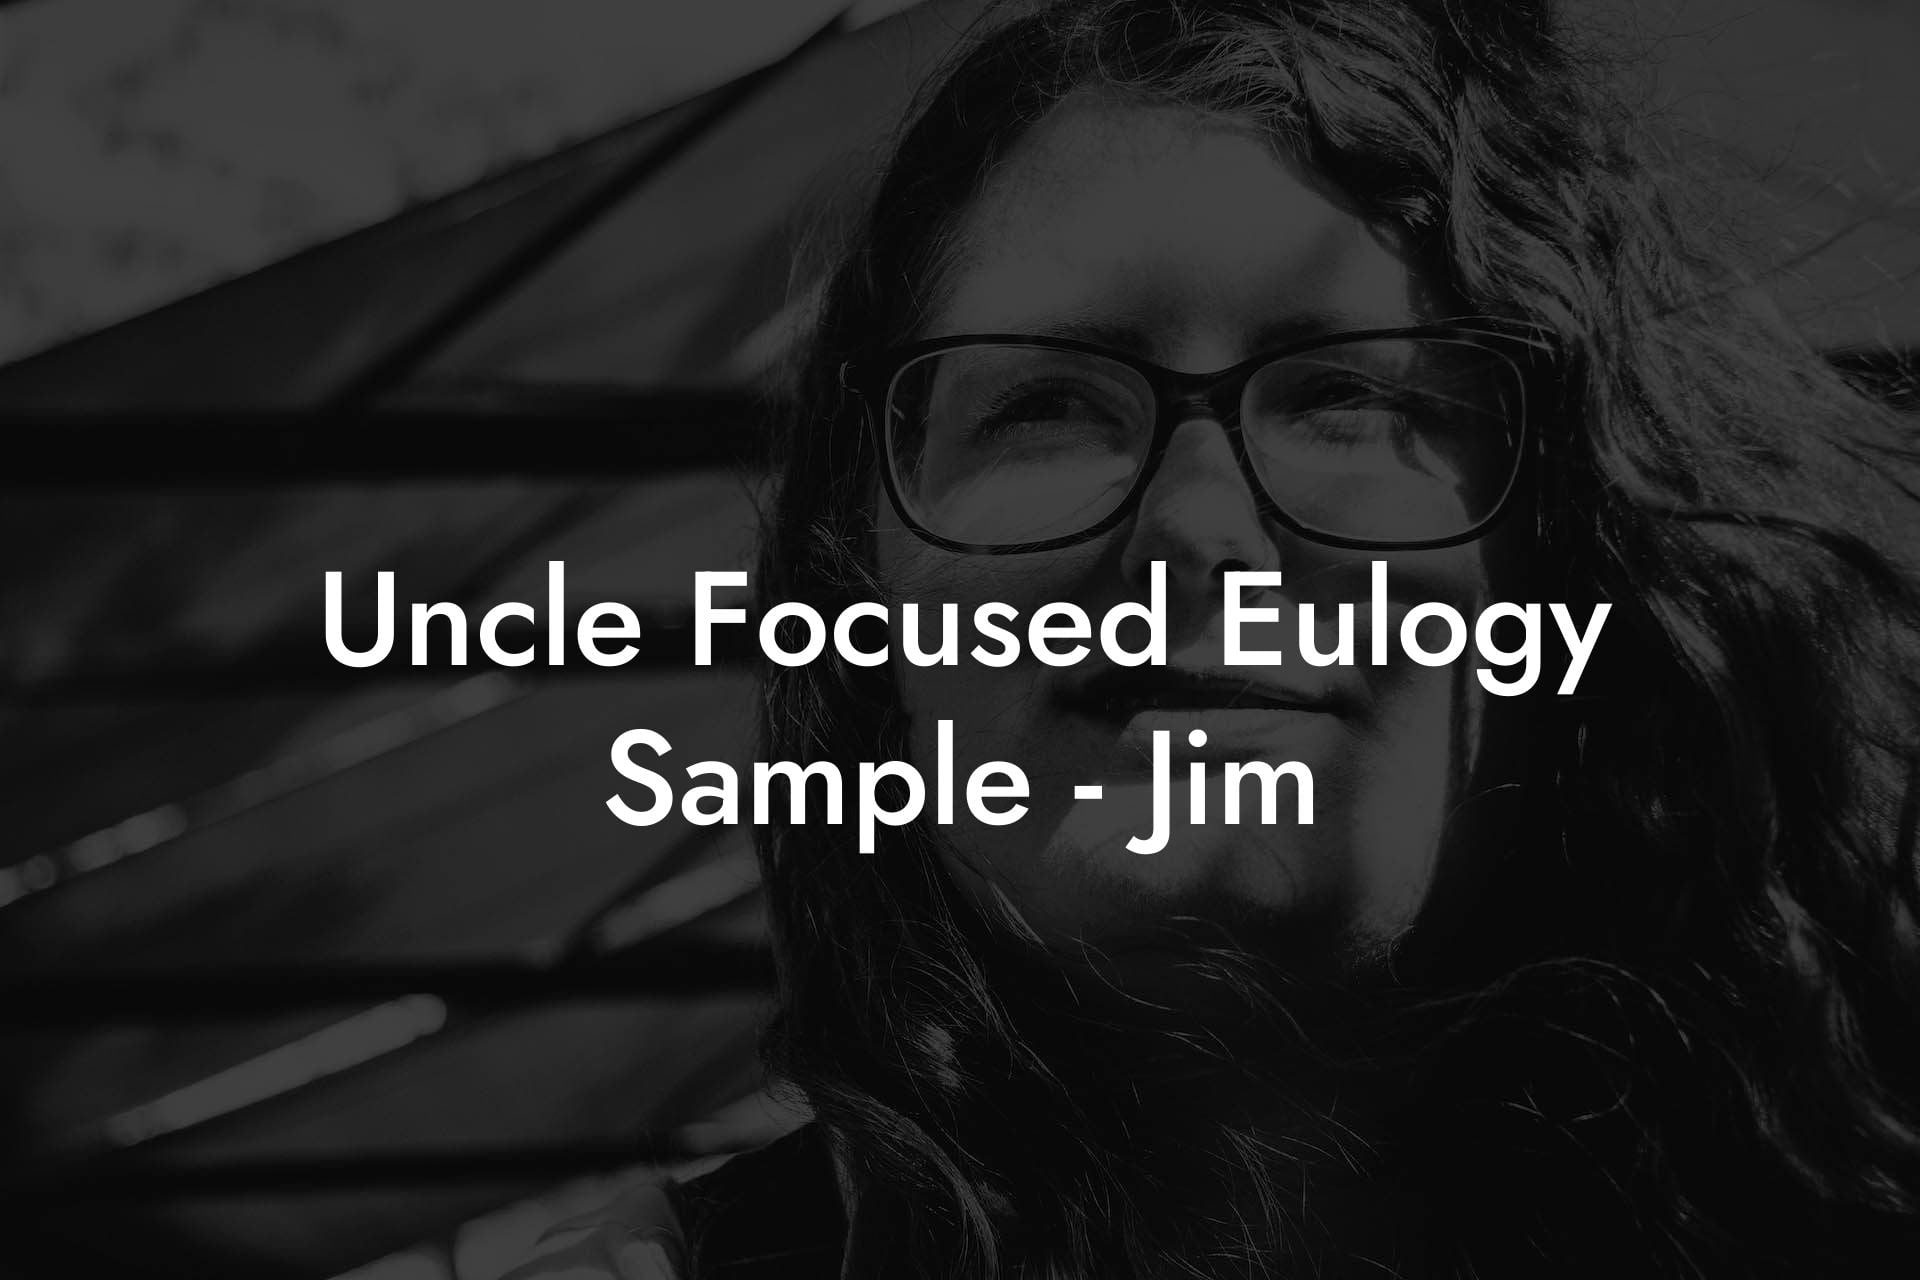 Uncle Focused Eulogy Sample - Jim